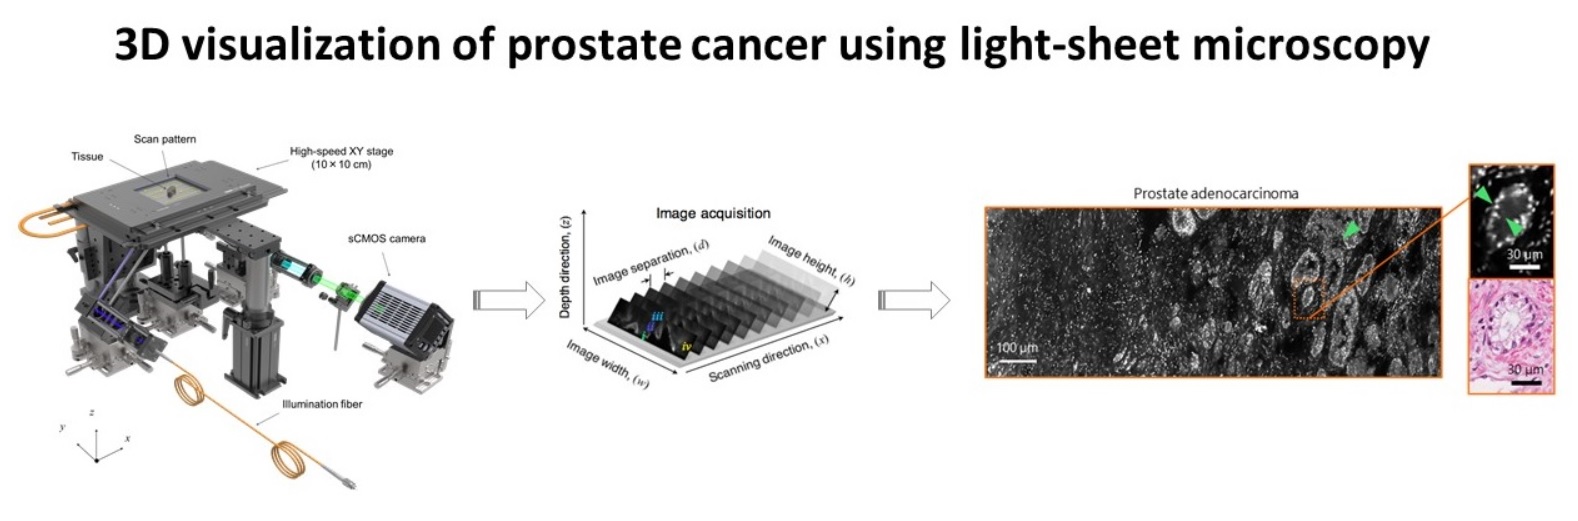 3D Visualization of Prostate Cancer Using Light-Sheet Microscopy